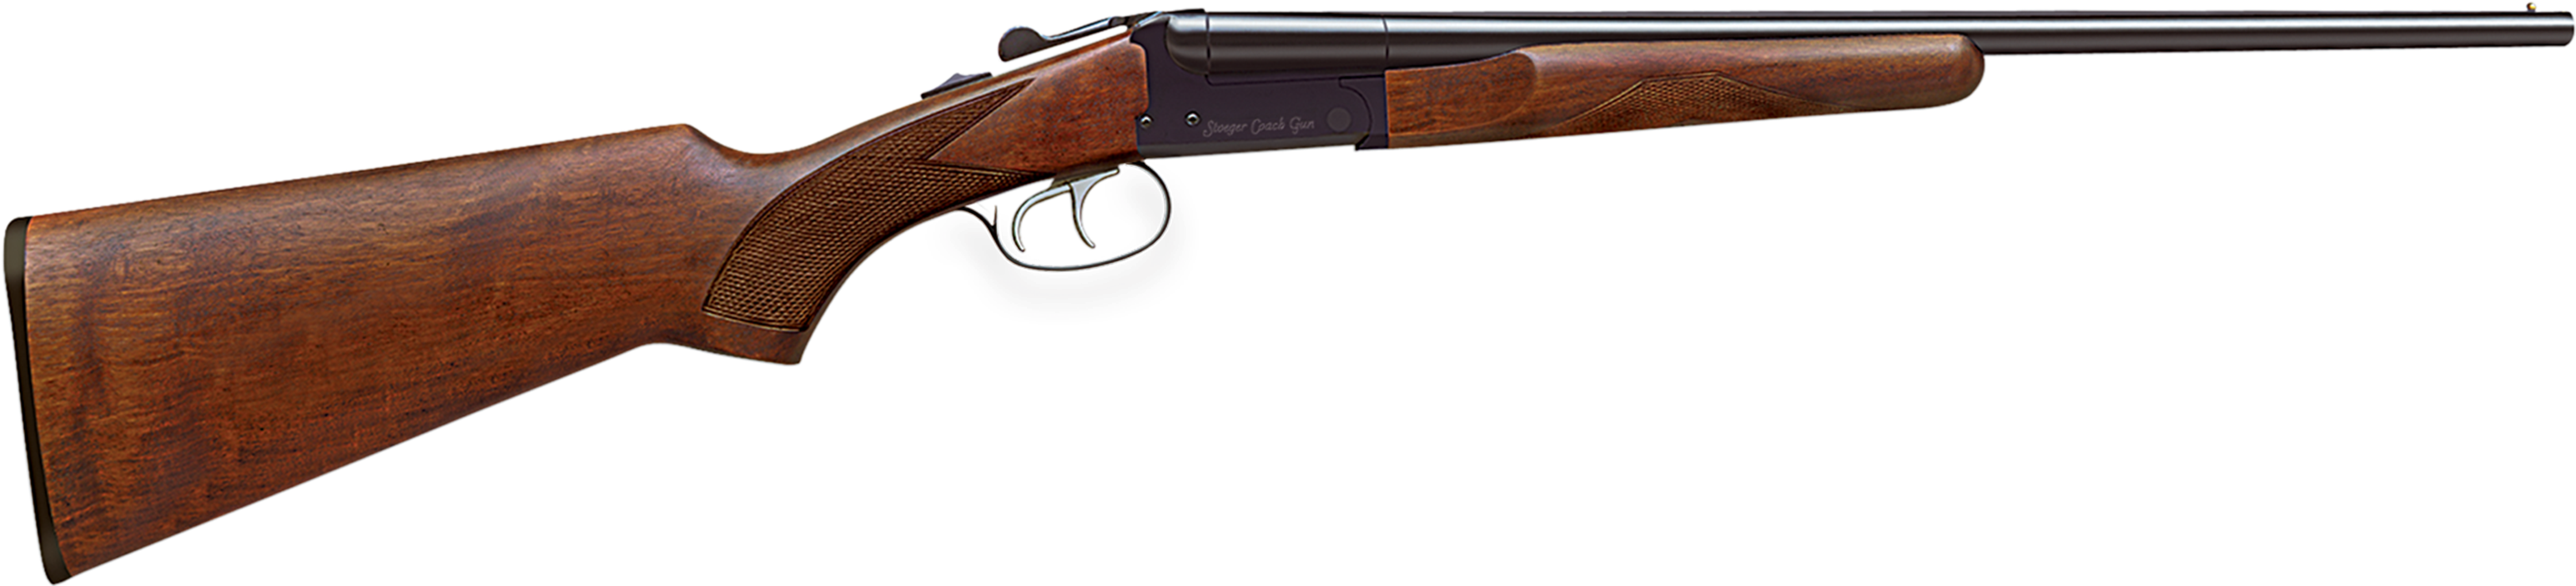 Shotgun Png - 410 Gauge Shotgun Clipart (2000x704), Png Download